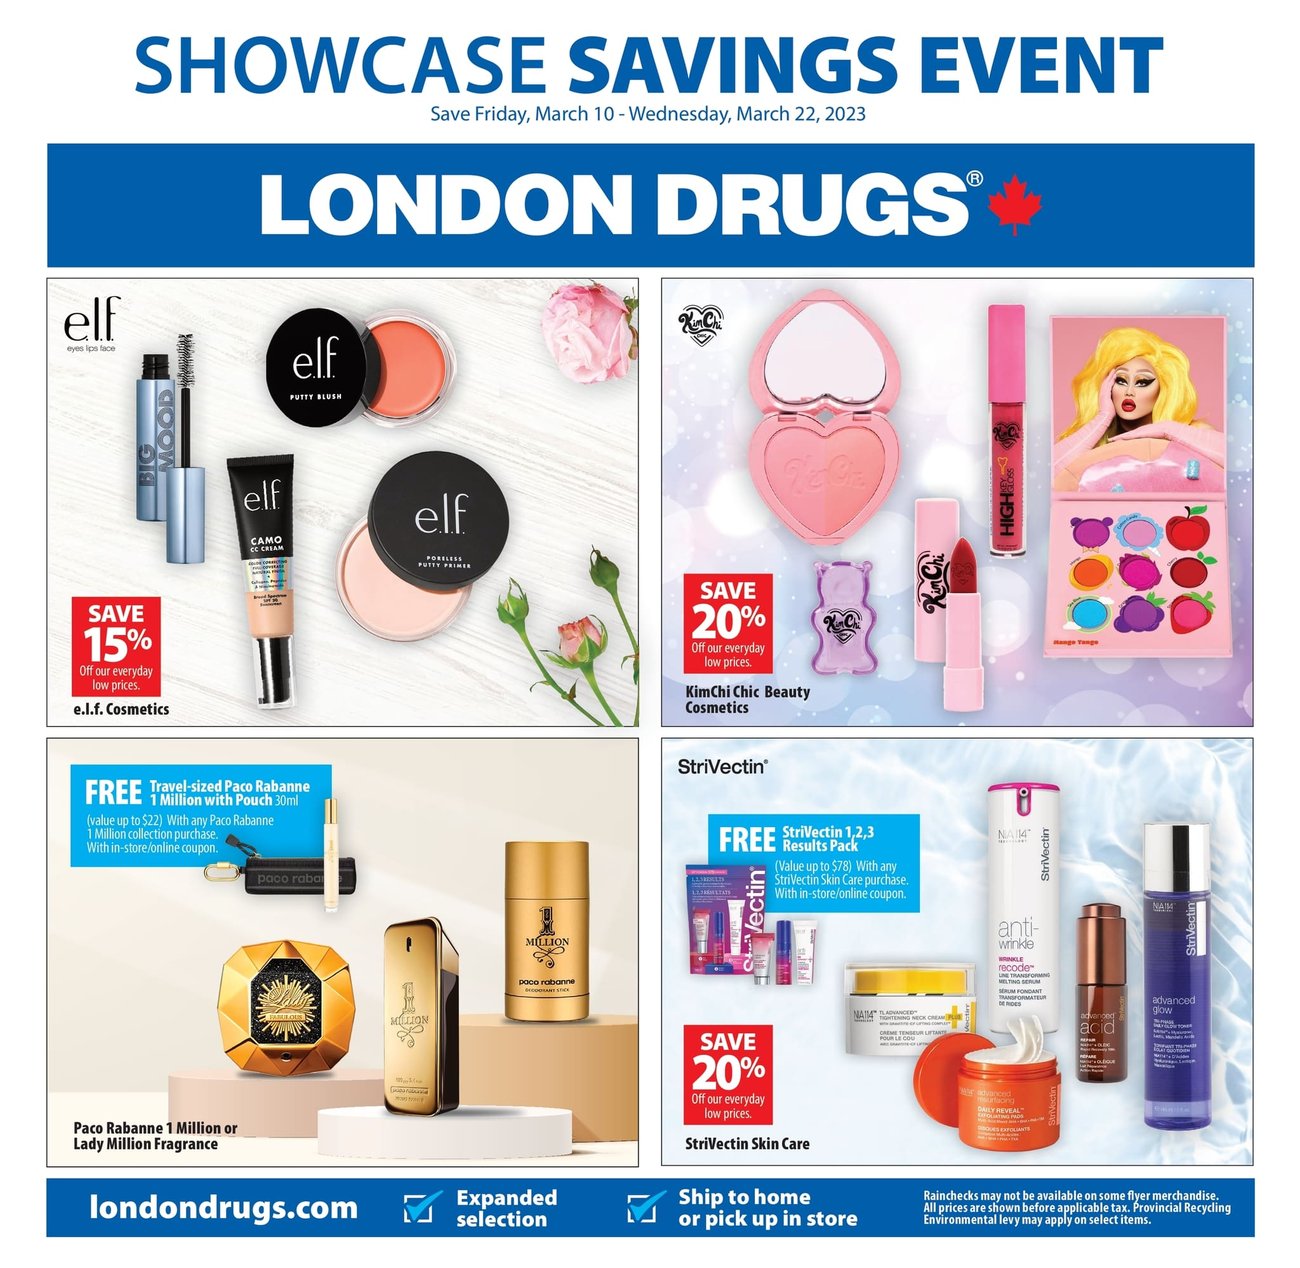 London Drugs - Showcase Savings Event - Page 1